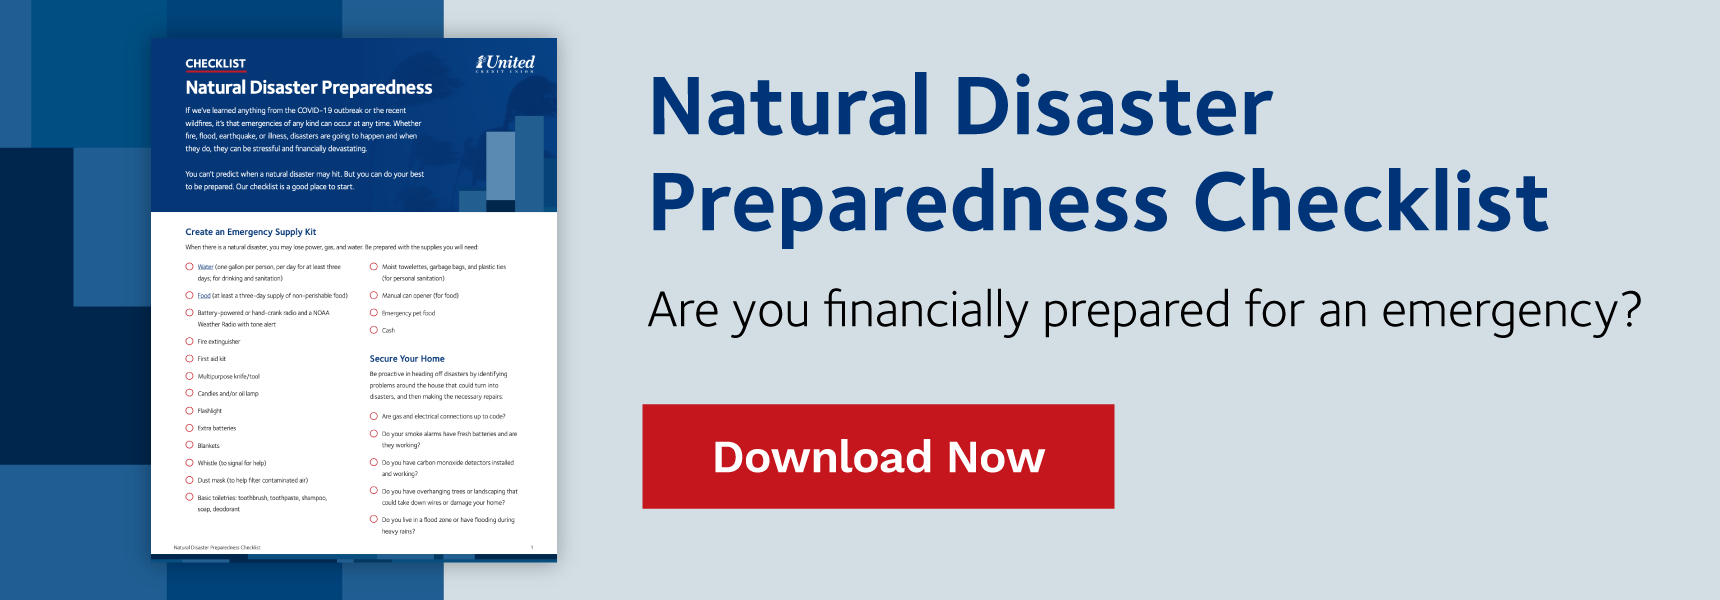 Download the natural disaster preparedness checklist